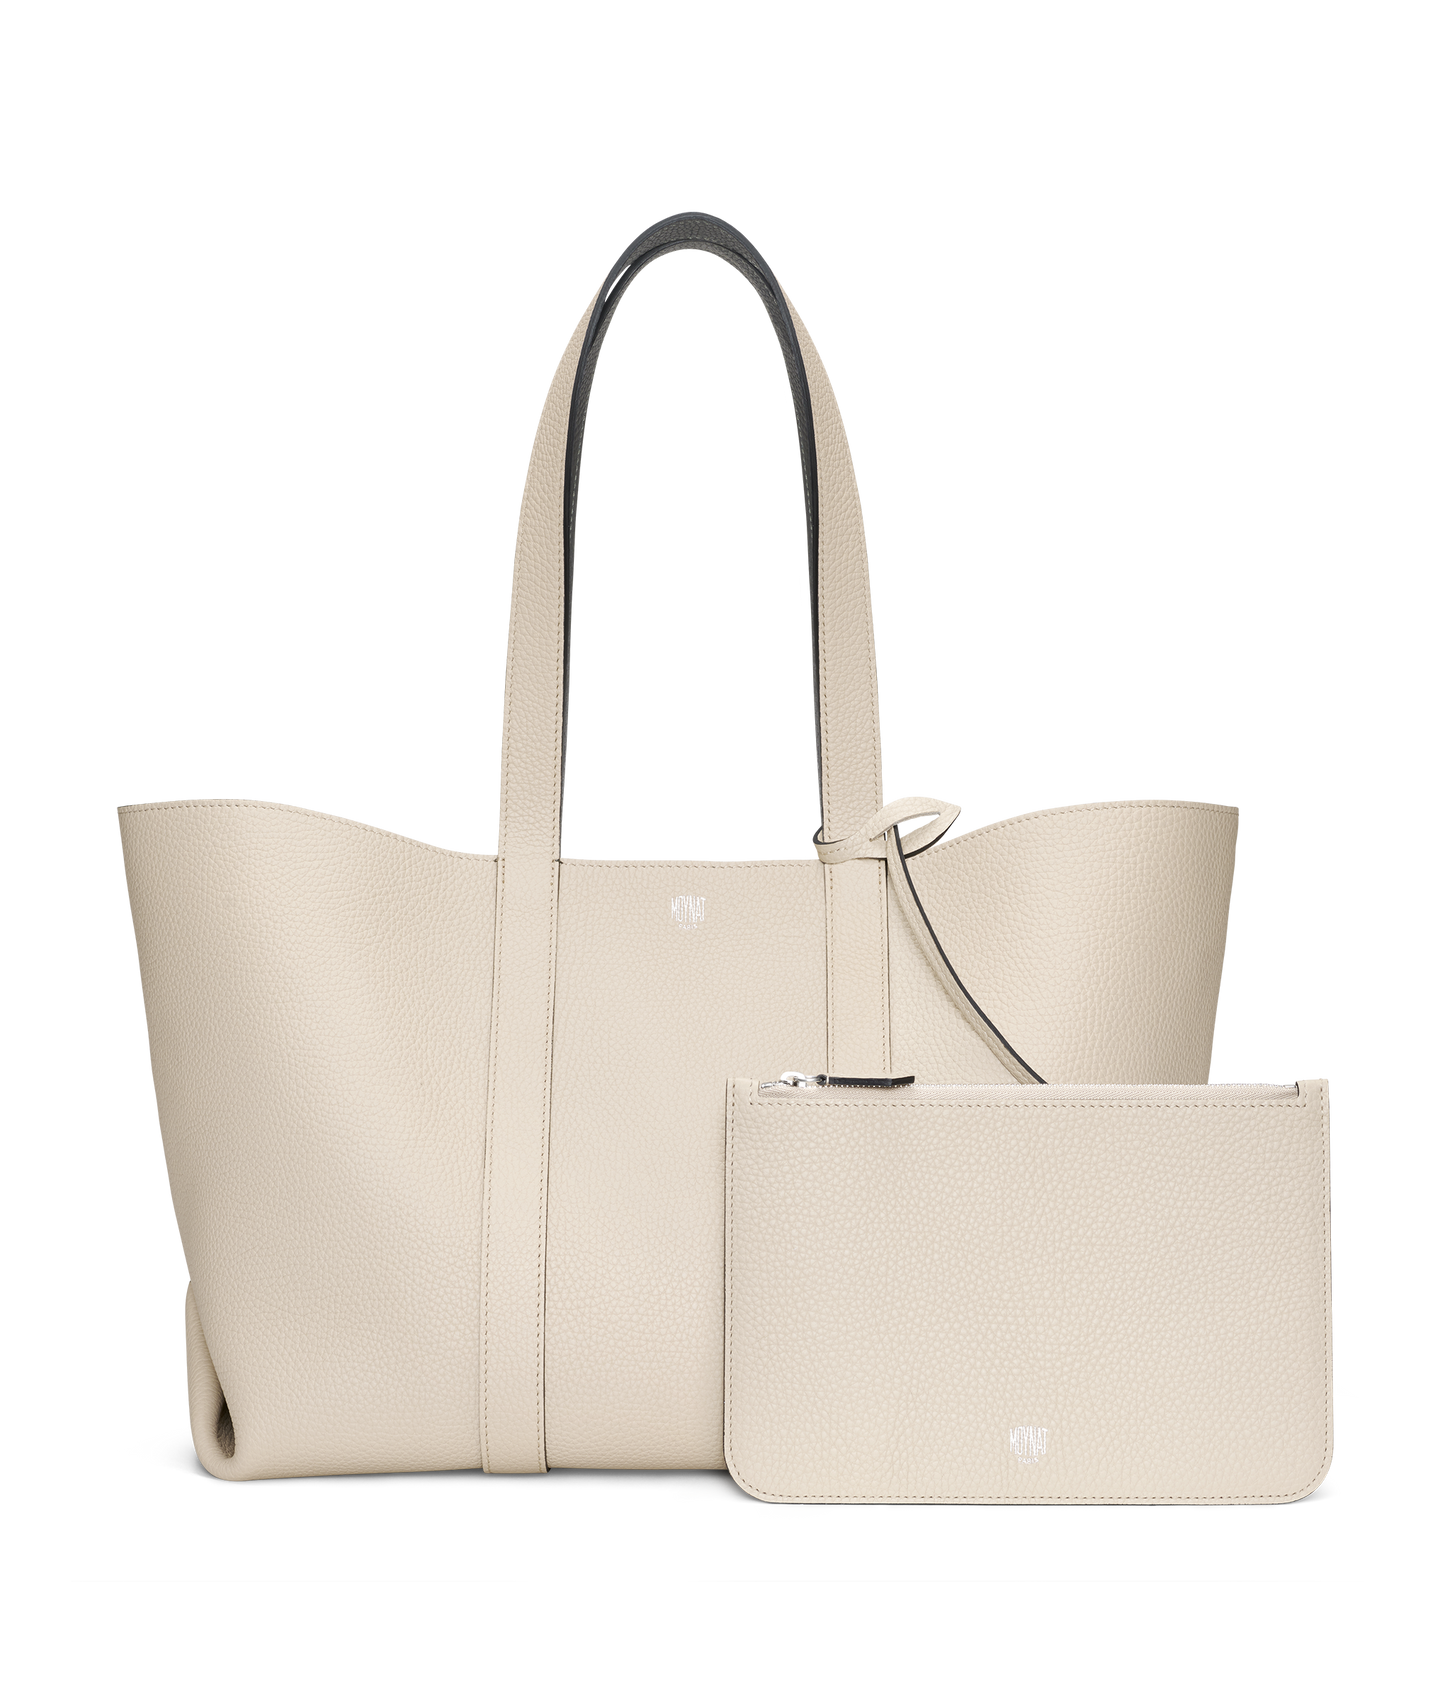 Duo Tote Bag Organizer / Moynat Duo Tote Bag Insert / Shopping 